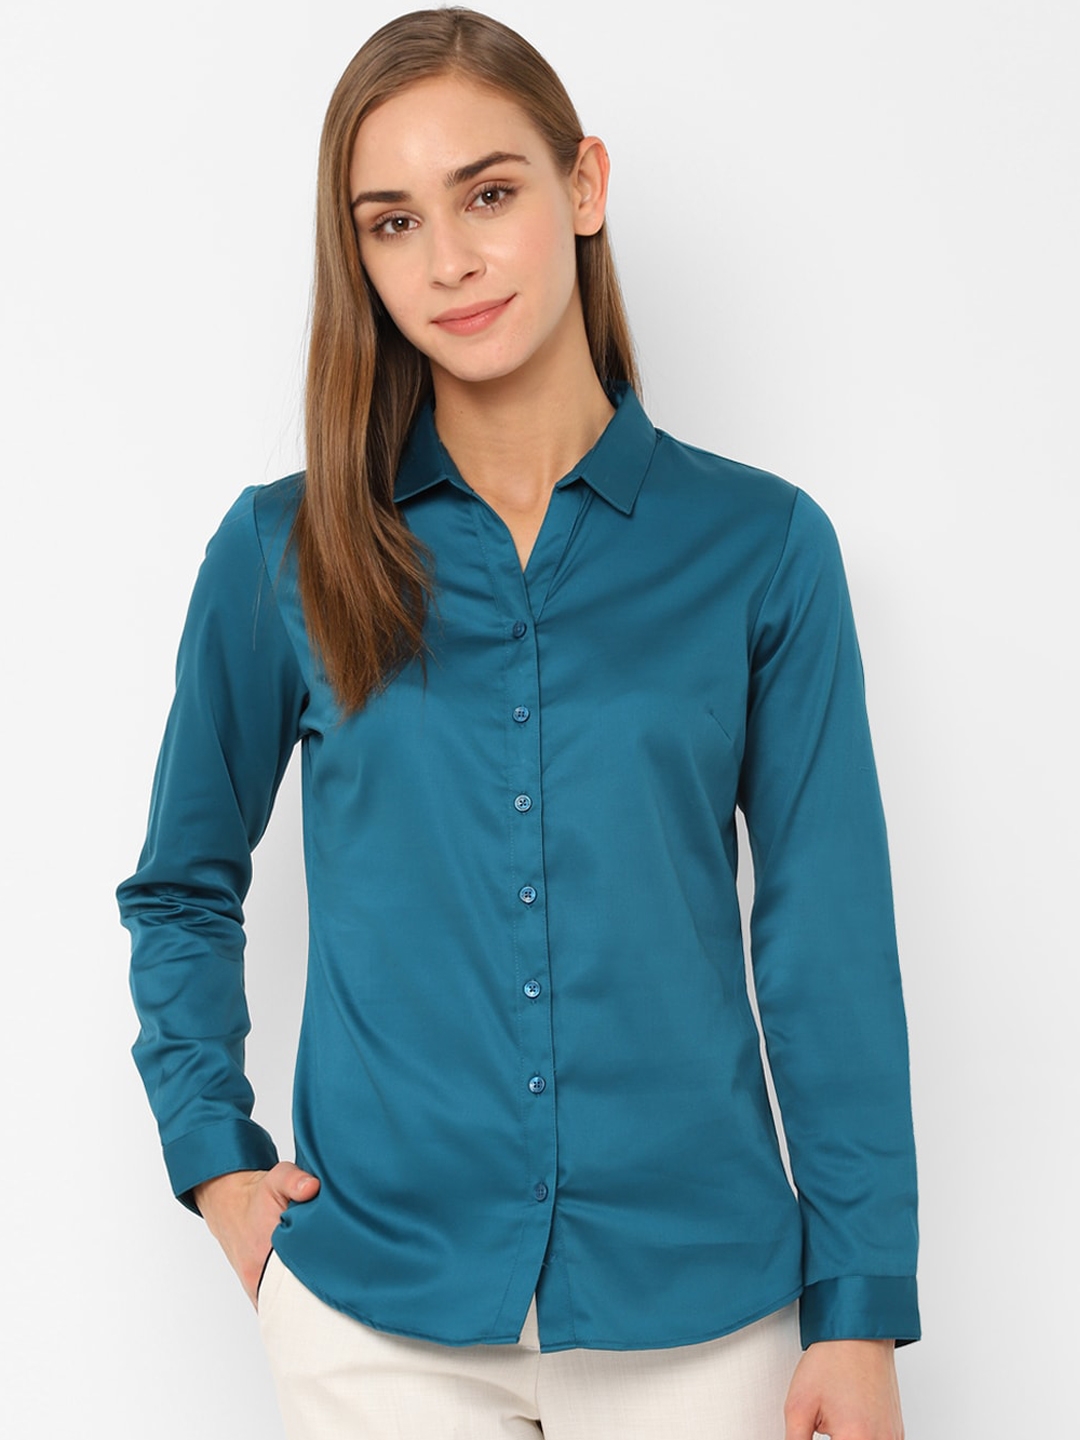 Allen Solly Woman Teal Blue Regular Fit Solid Formal Shirt